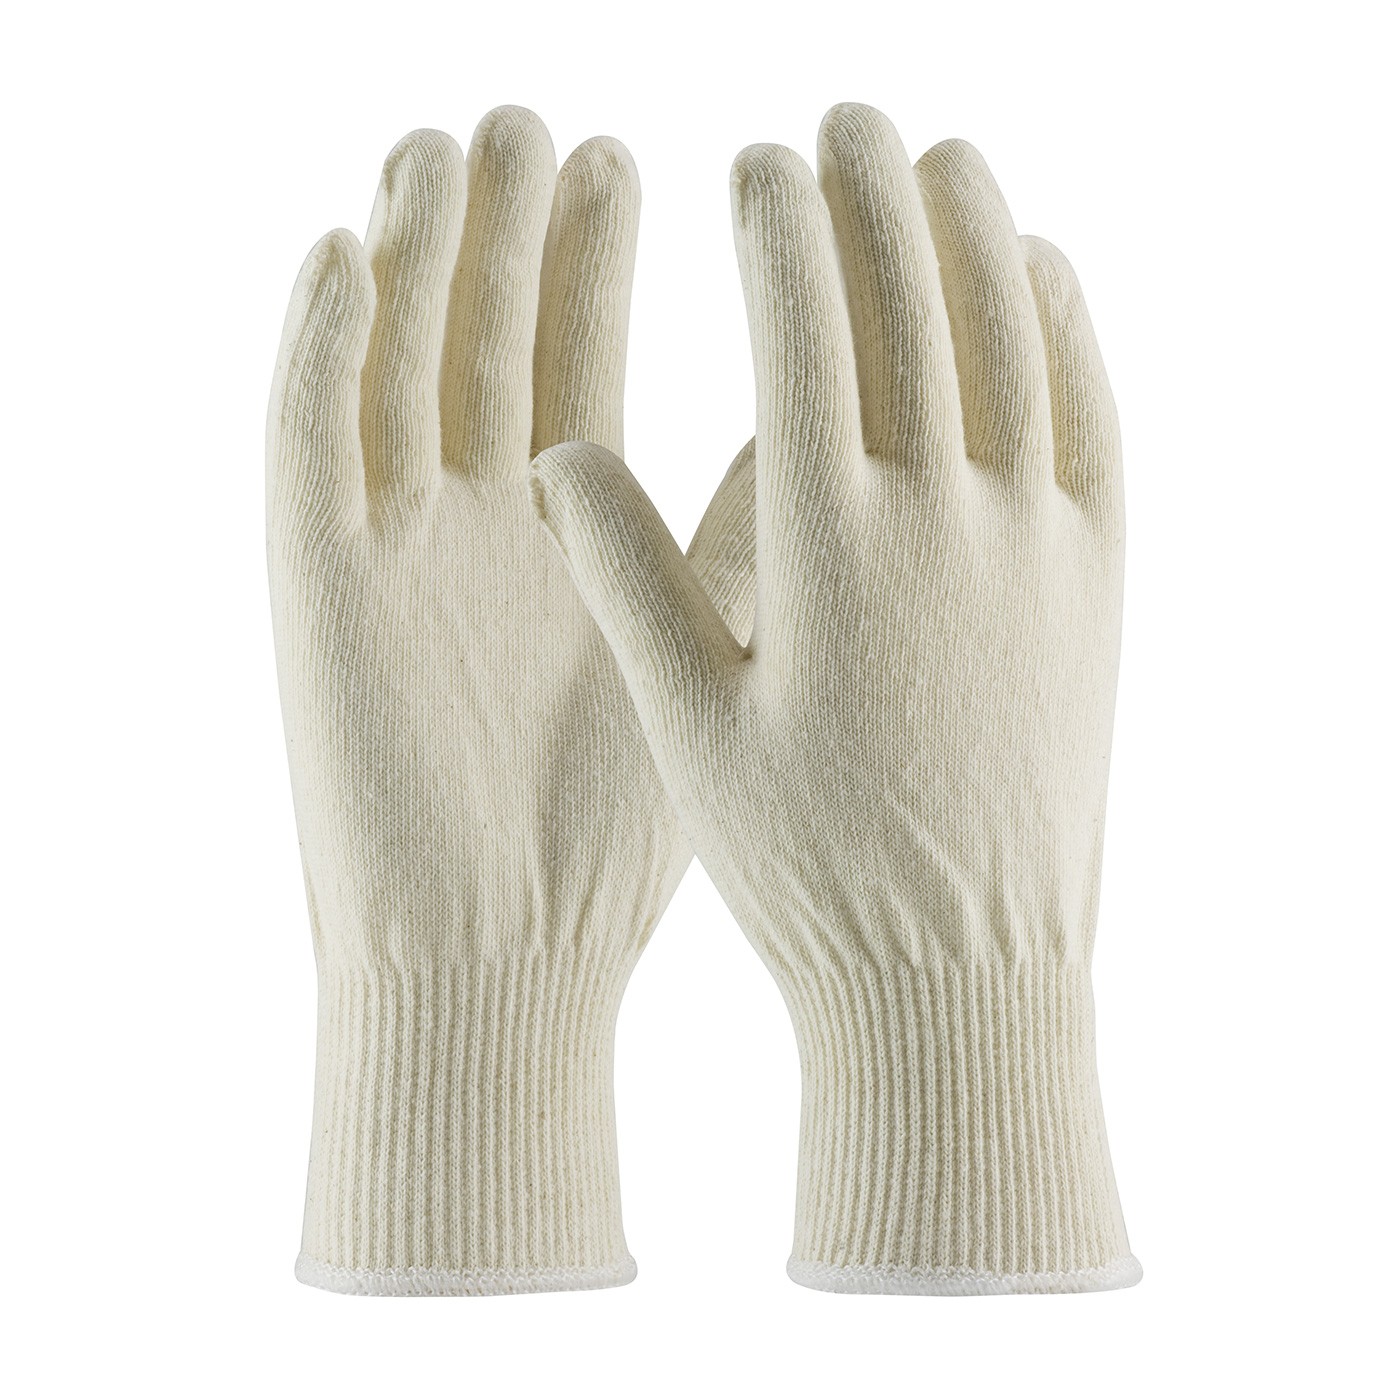 PIP® Light Weight Seamless Knit Cotton/Polyester Glove - 13 Gauge Natural  (#35-C2113)